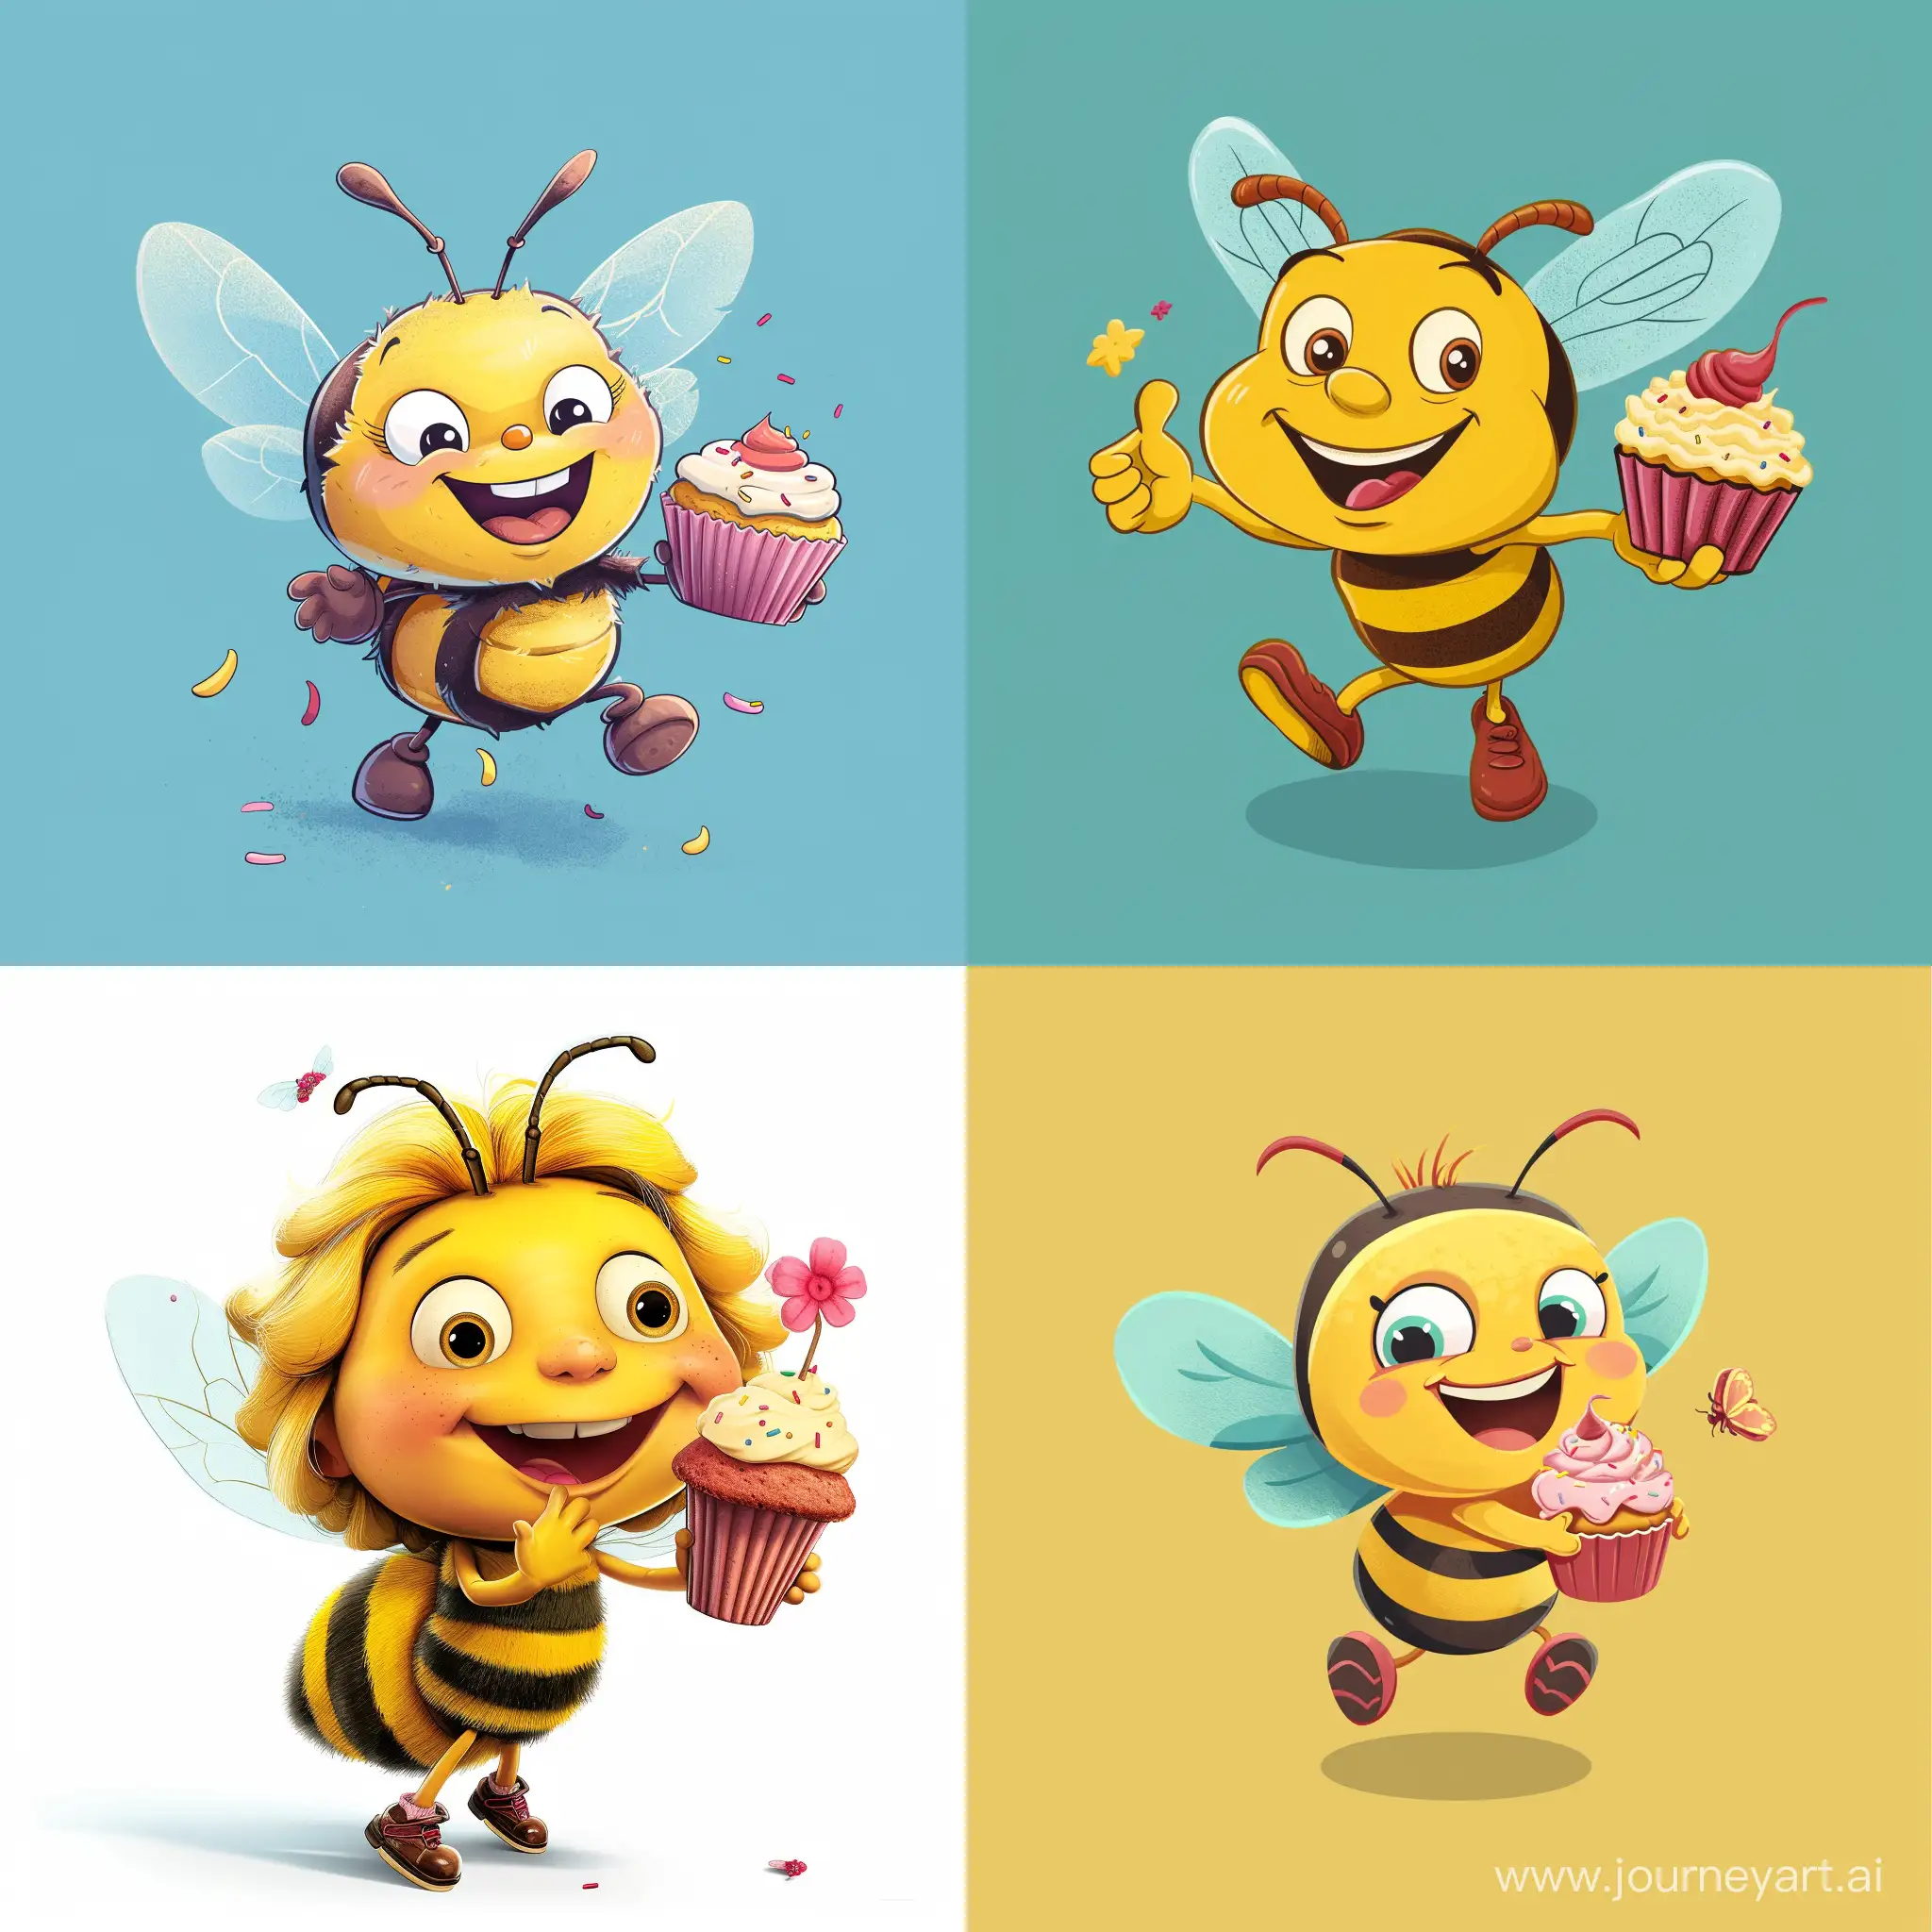 Joyful-Bee-Flying-with-a-Cupcake-in-Pixar-Style